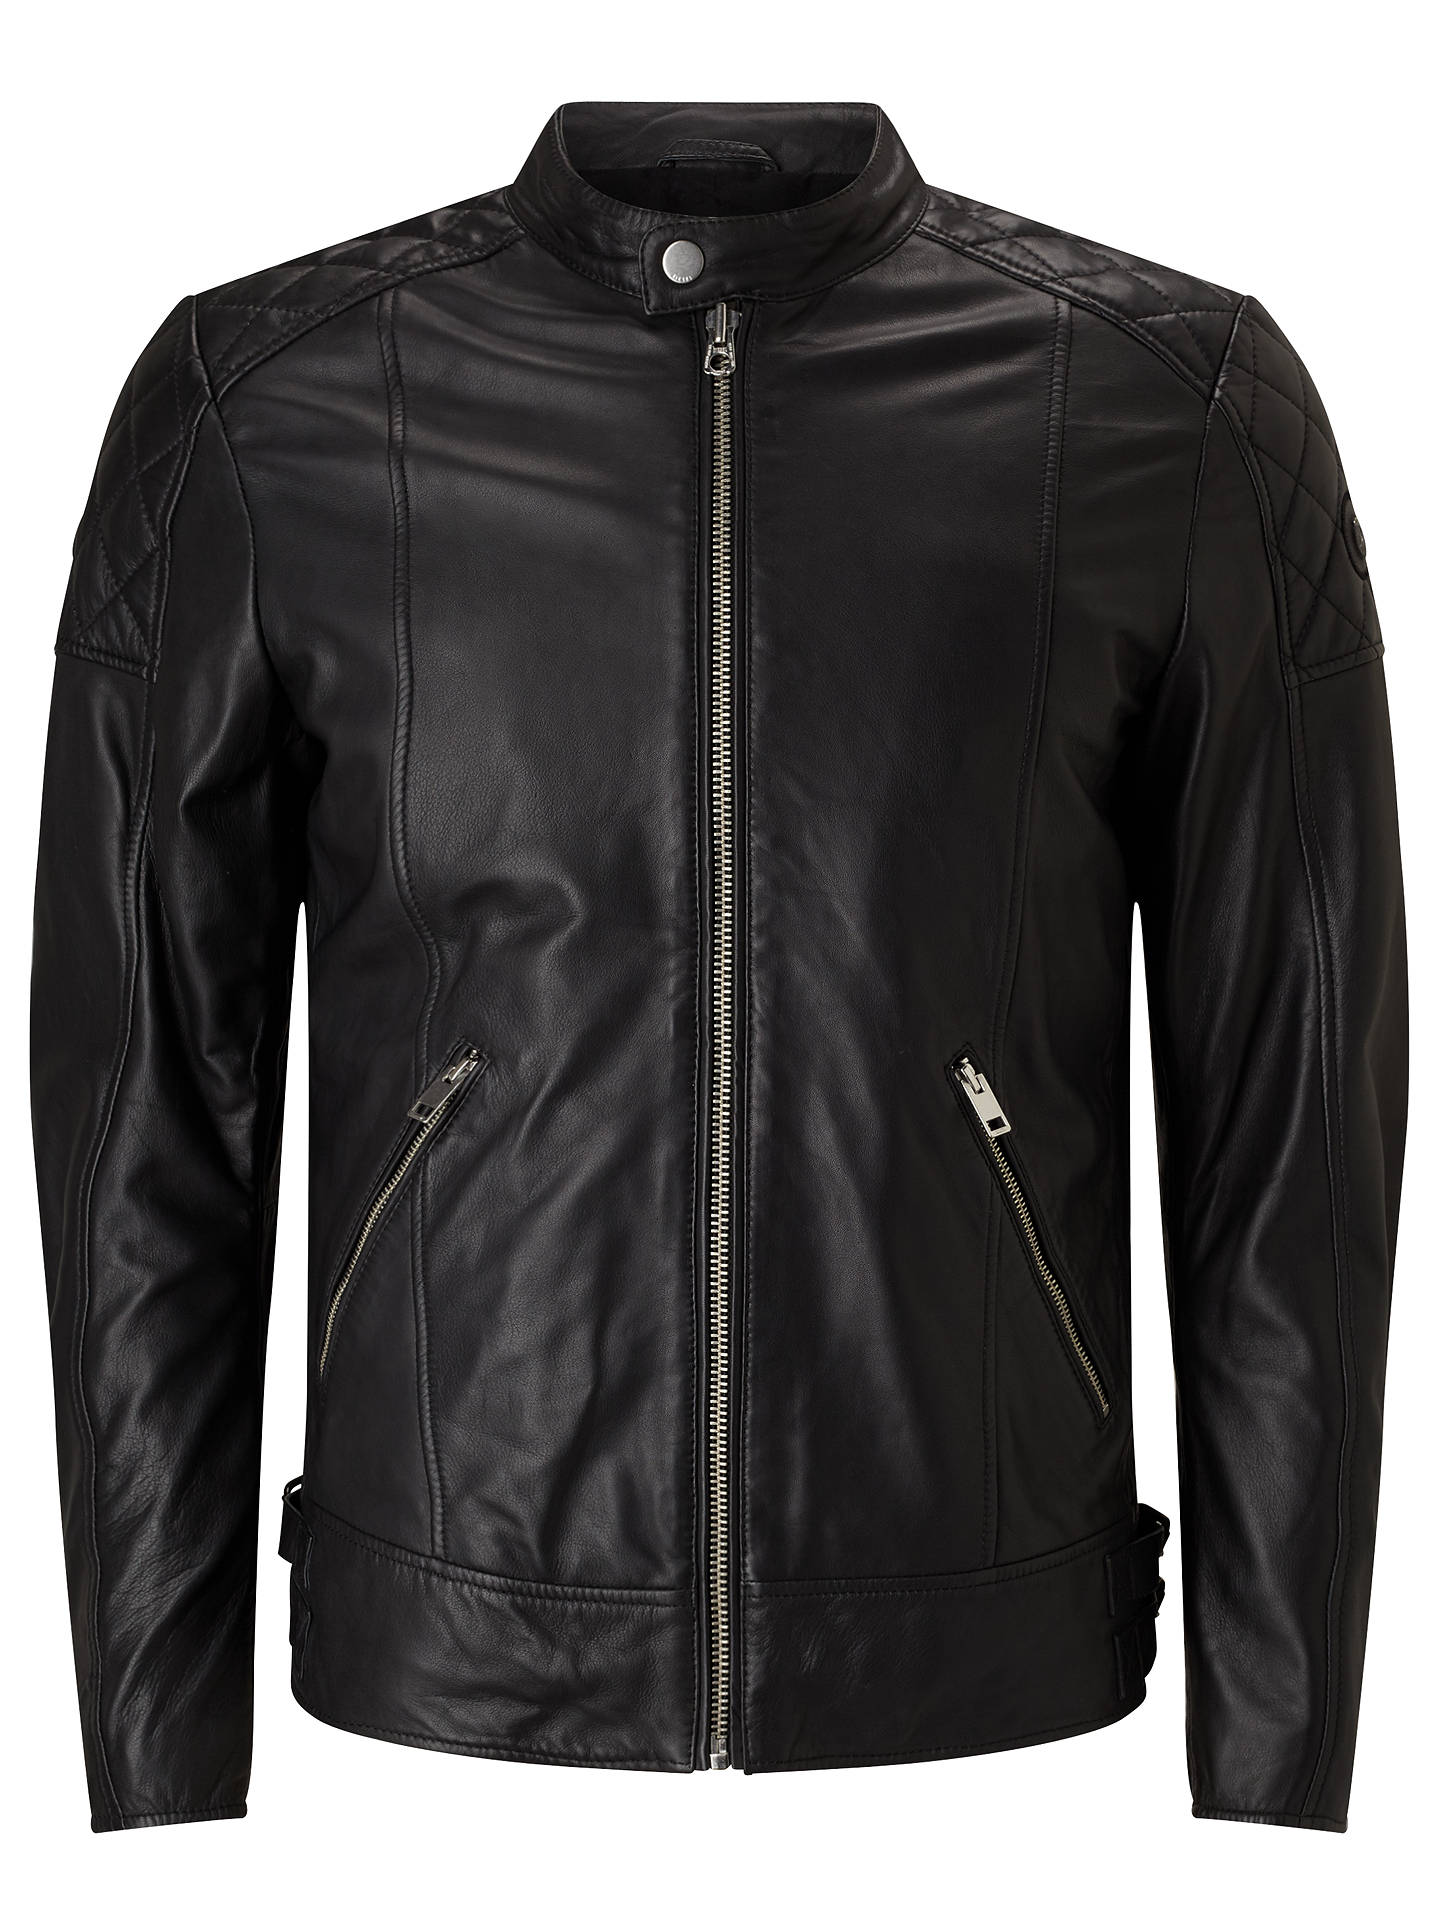 Diesel L-Marton Leather Jacket, Black at John Lewis & Partners